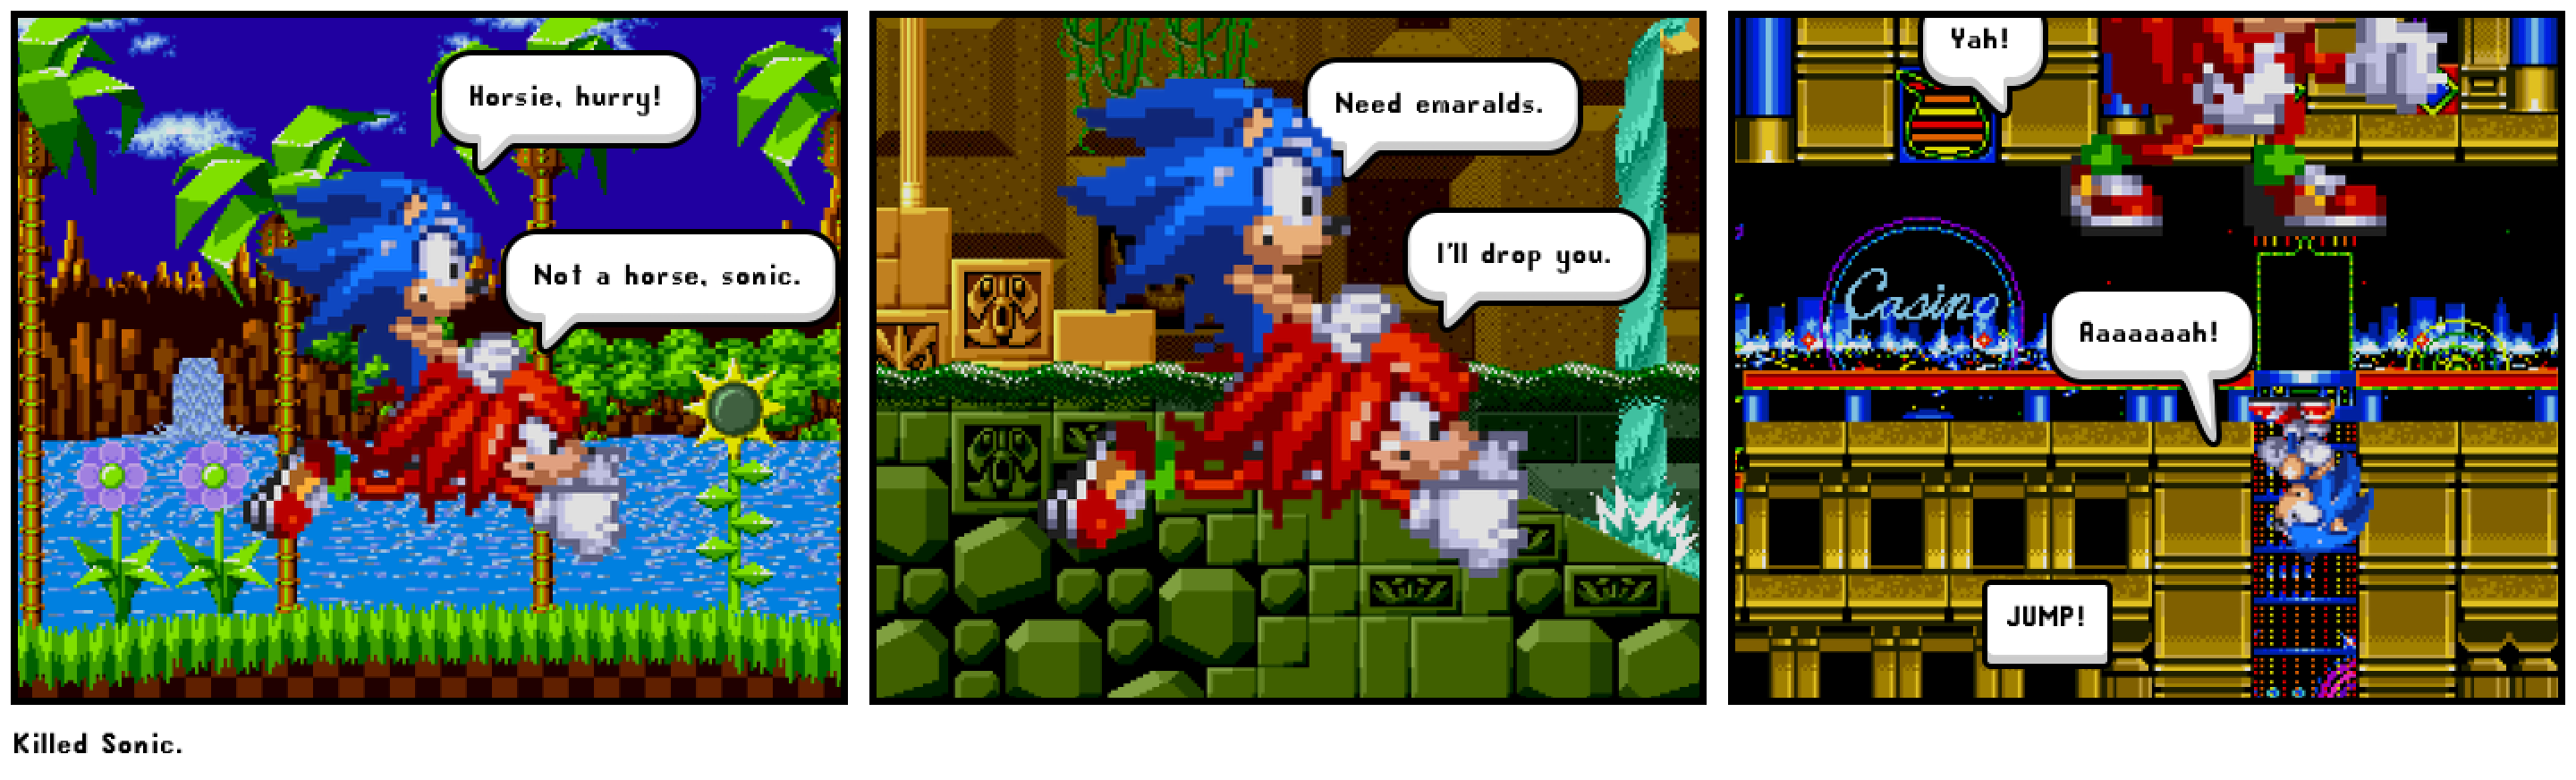 Killed Sonic.